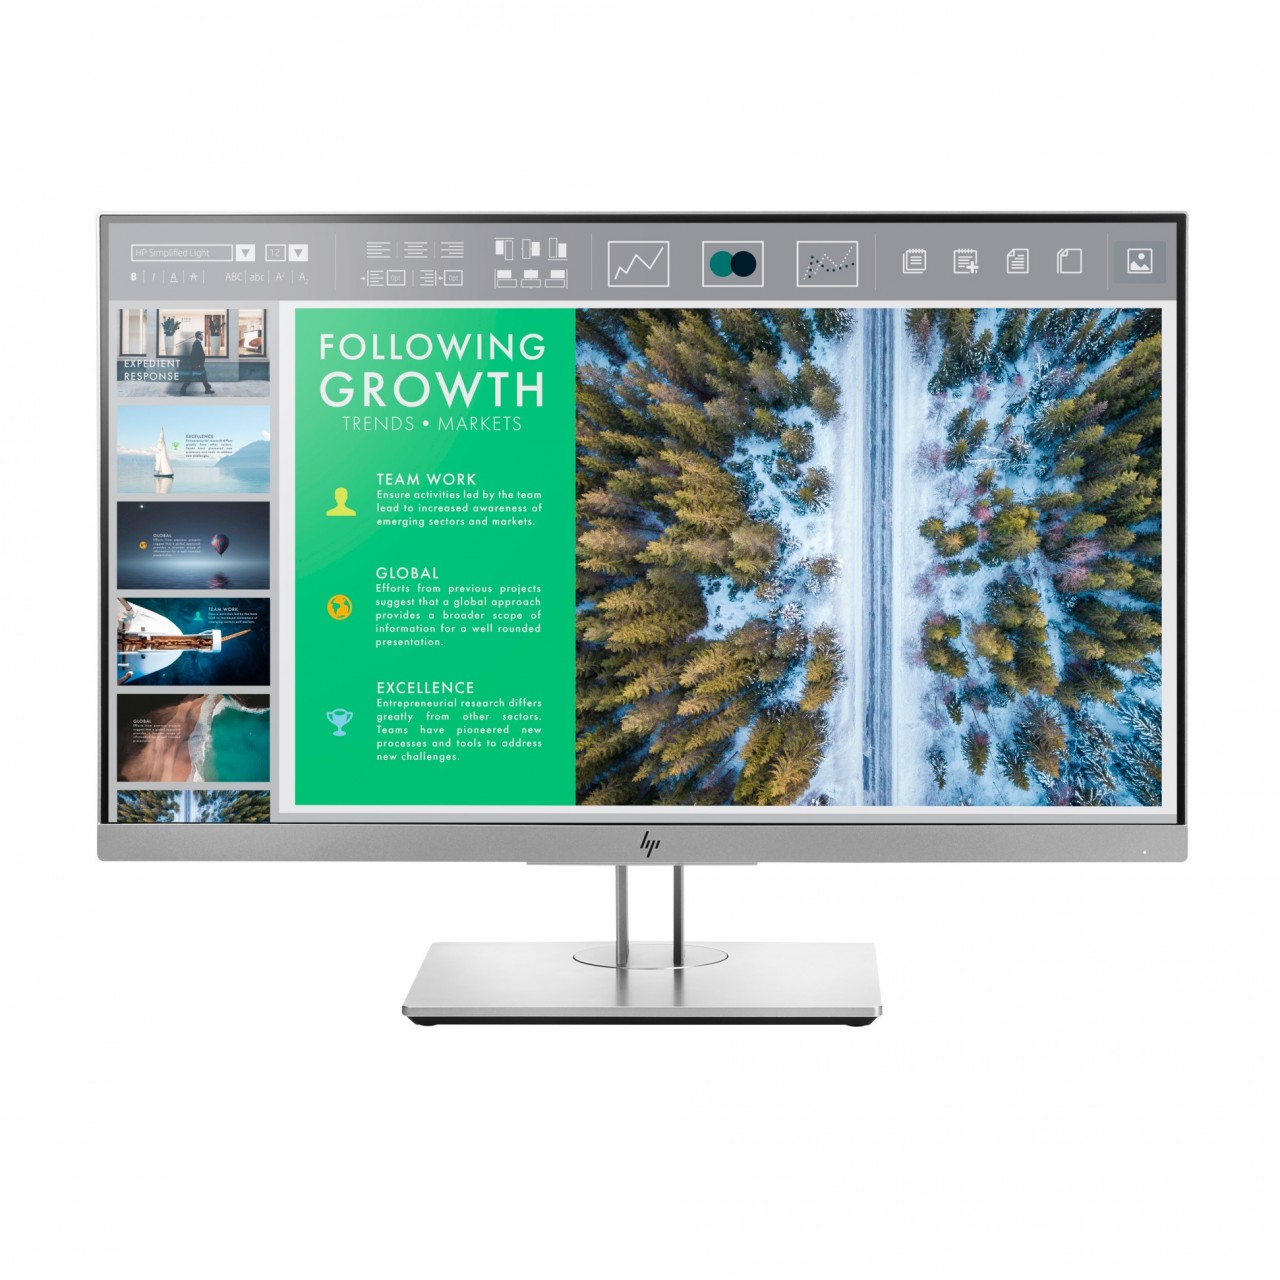 HP E243 Elite Display LED Monitor For Desktop PC - 24”